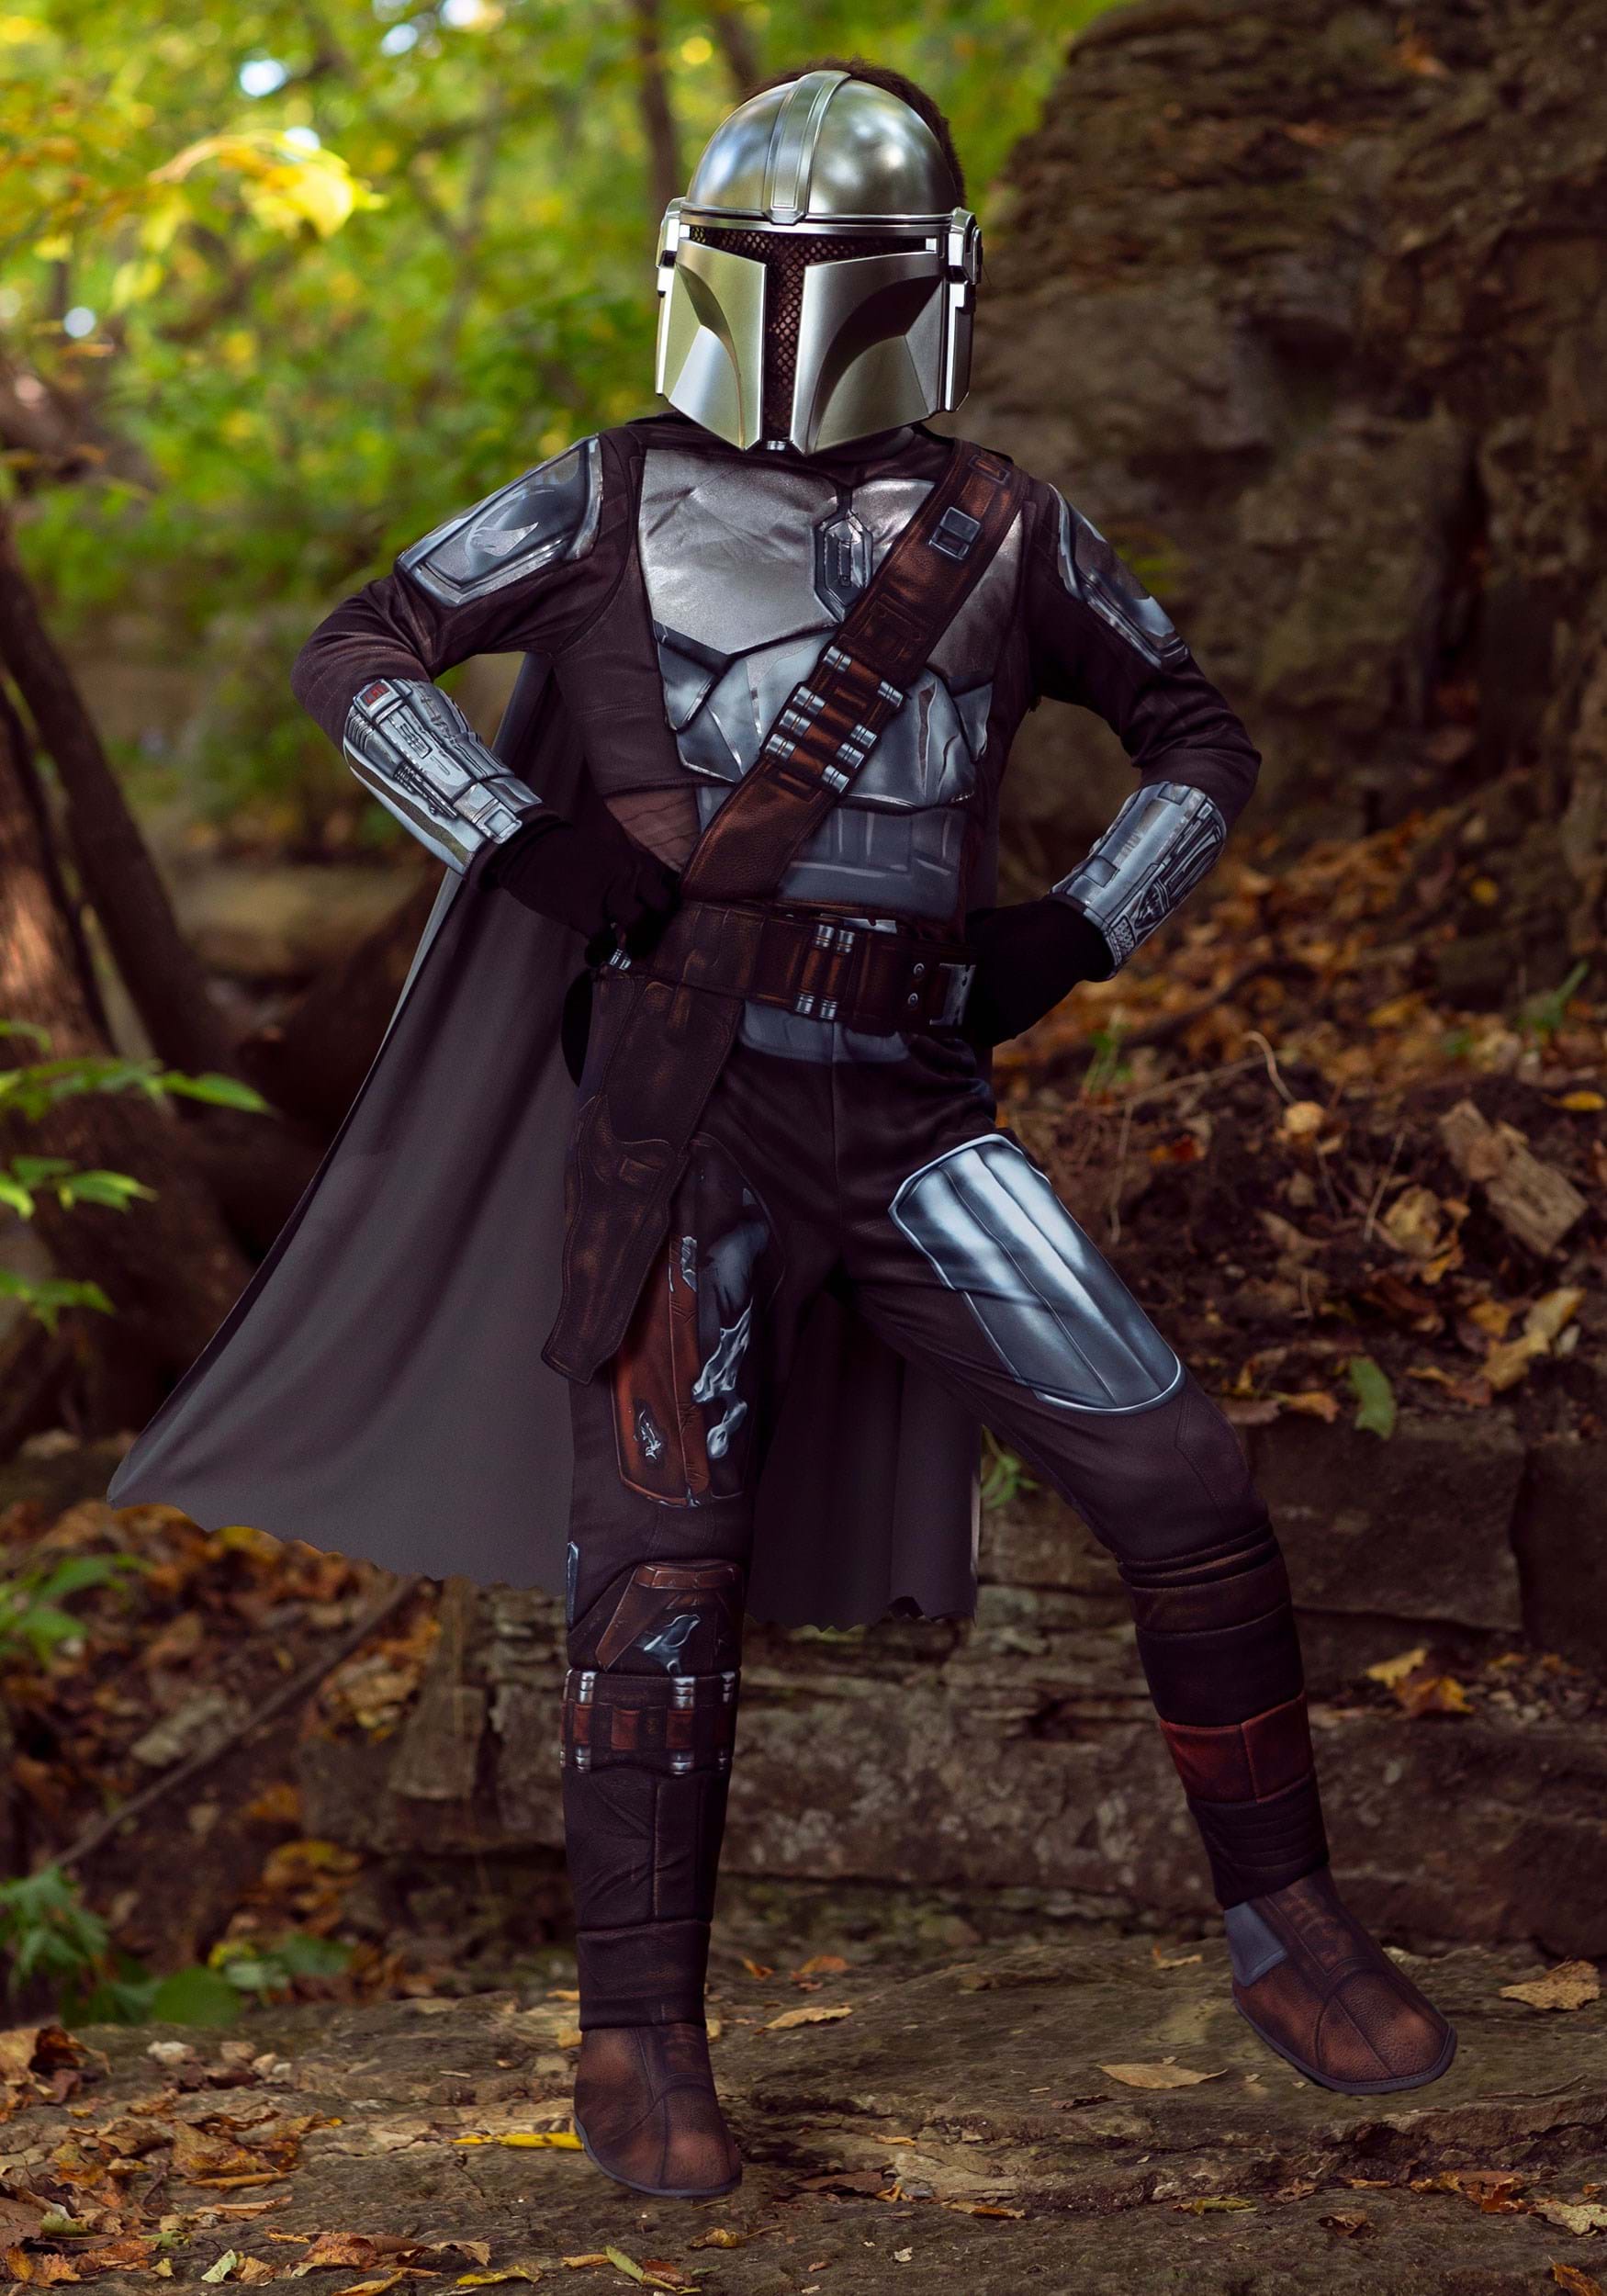 Mandalorian Beskar Armor Men's Costume